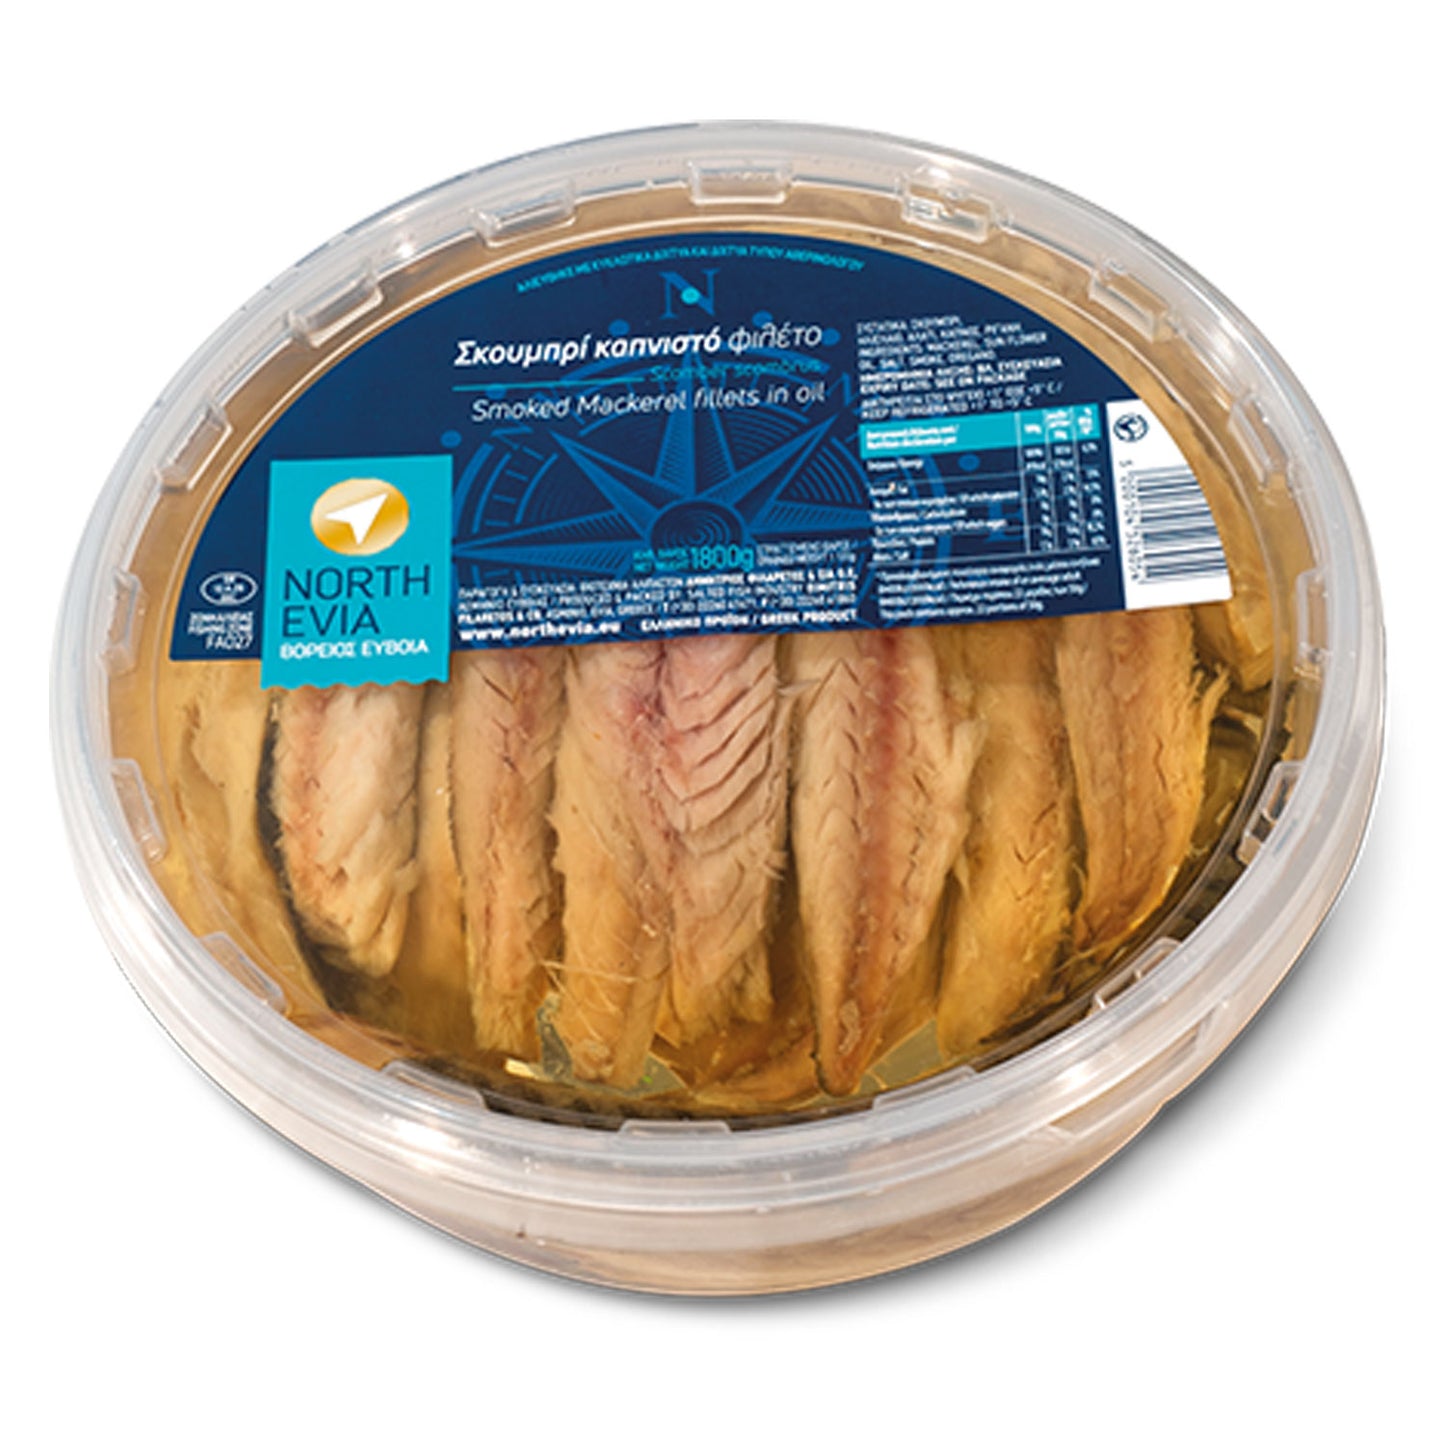 Geräucherte Makrelenfilets aus Euböa - 2kg